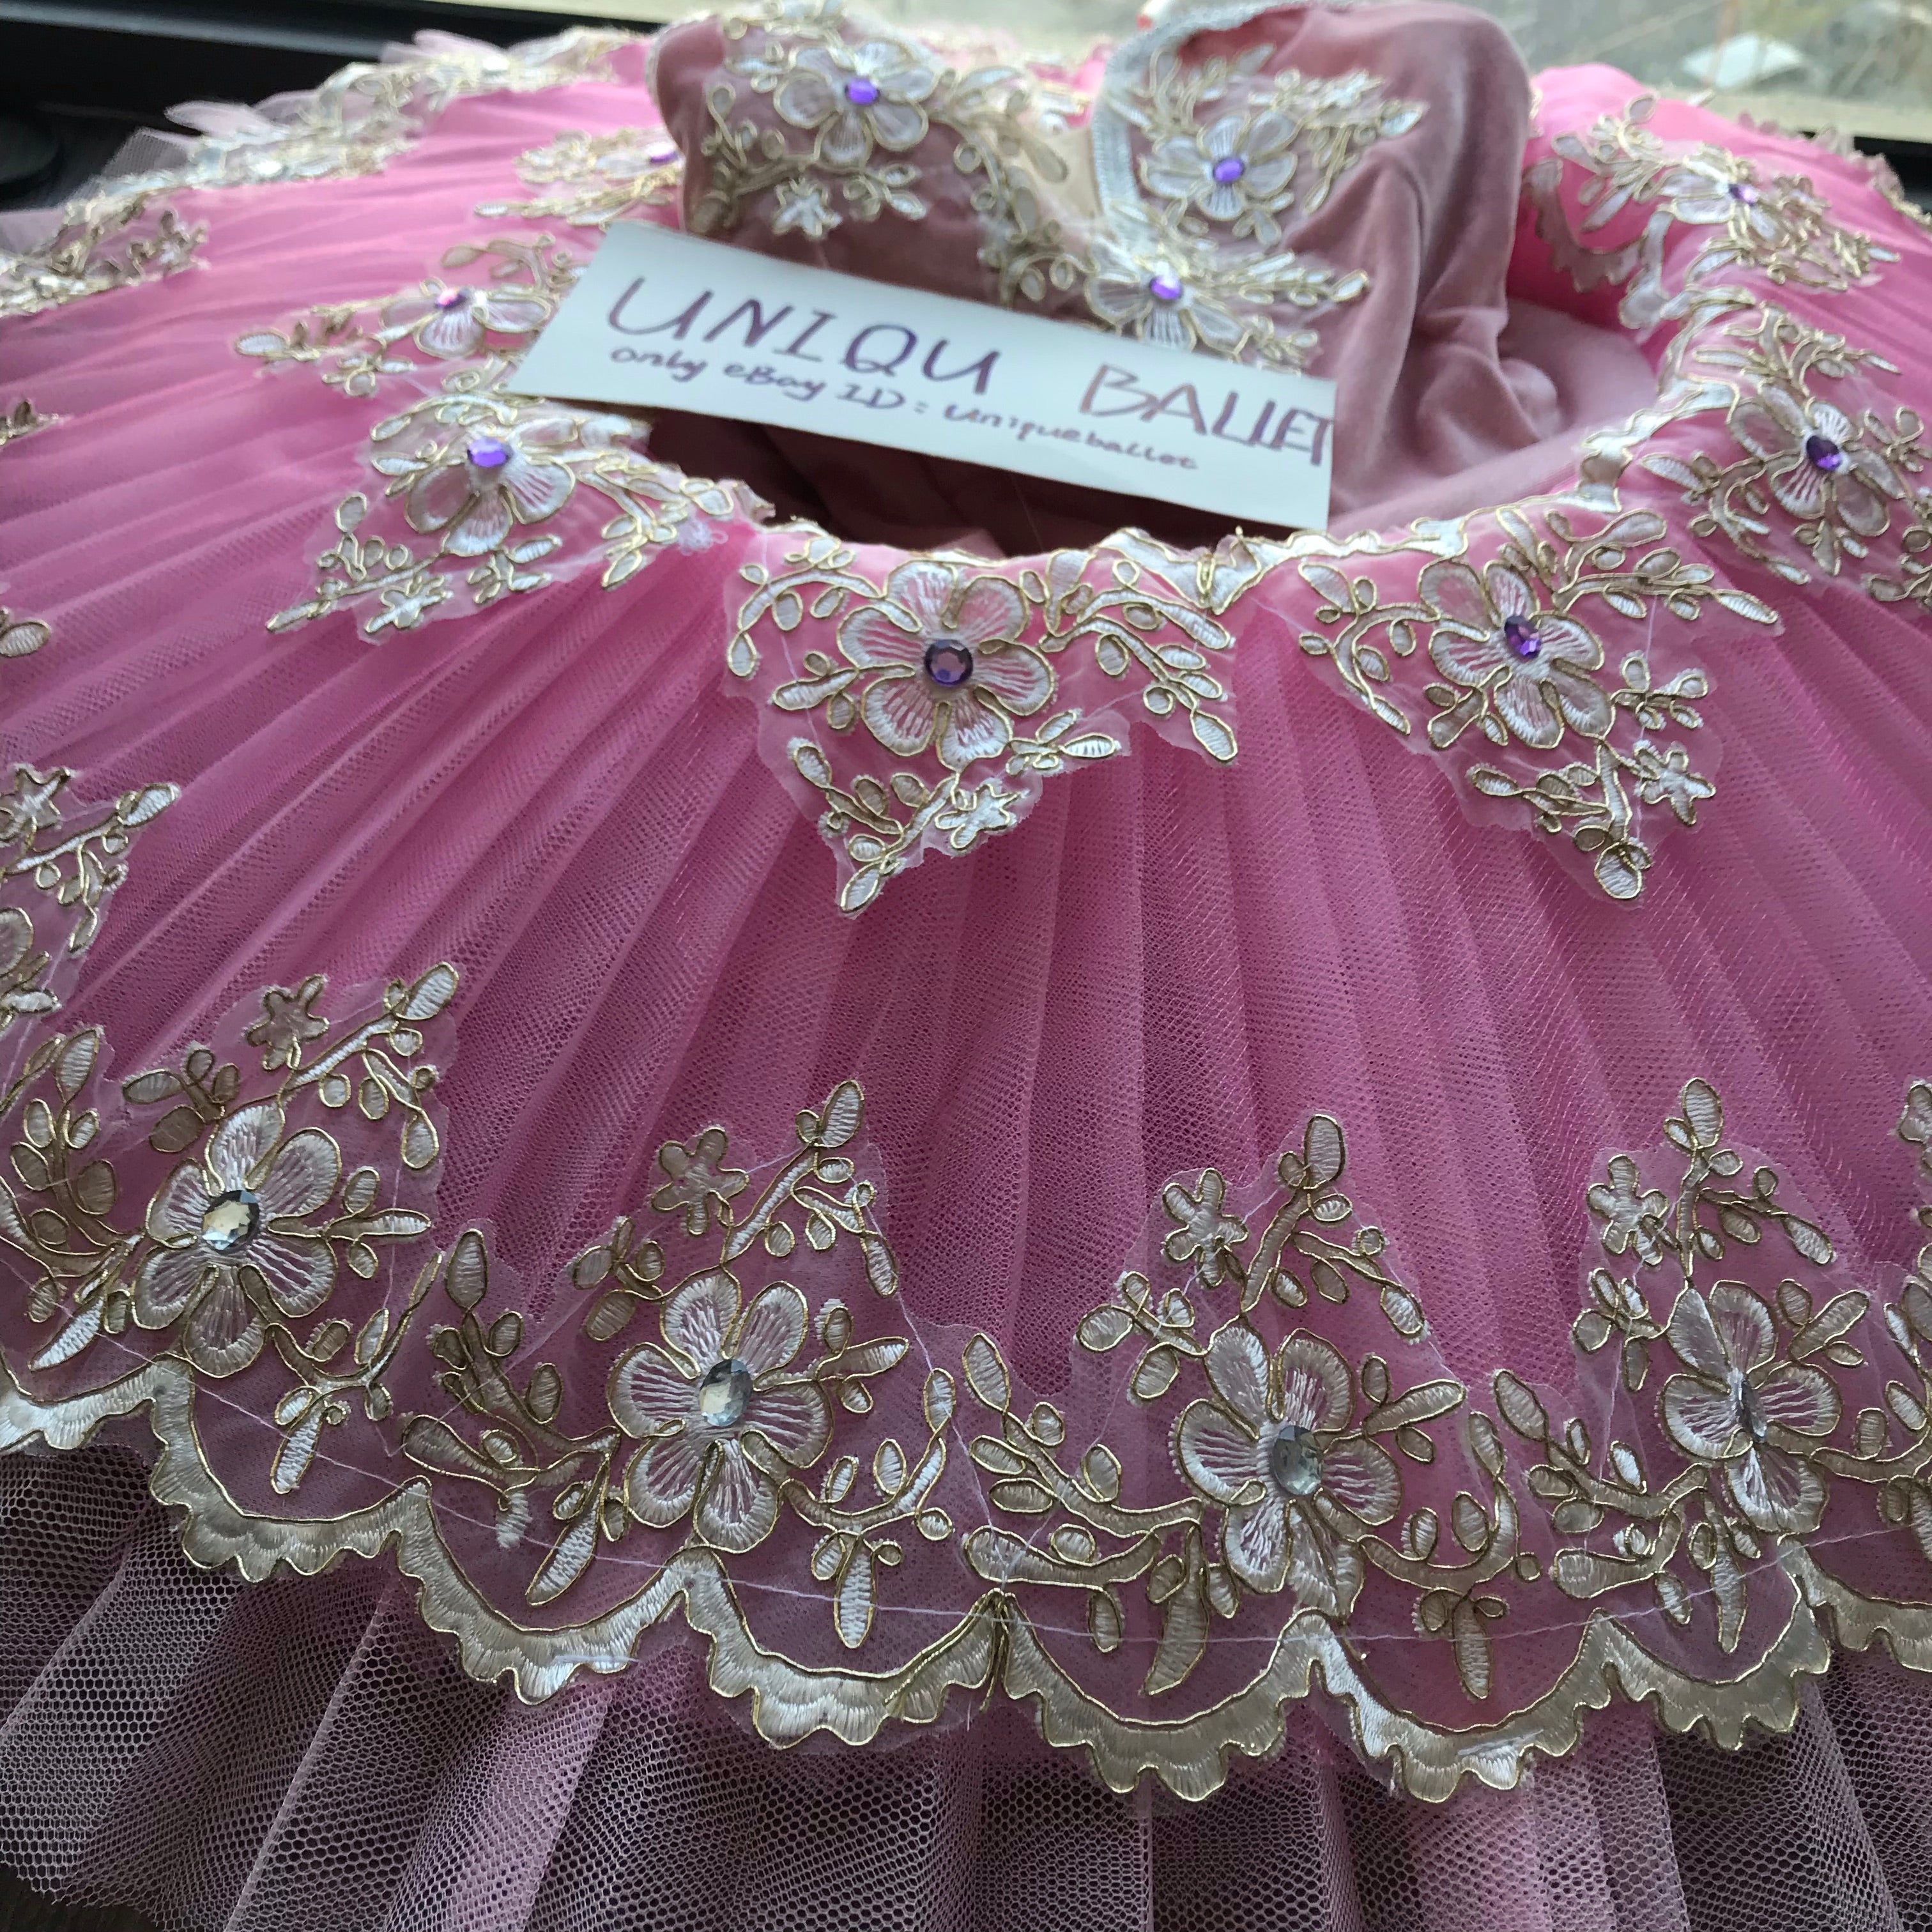 Pink Sleeping Beauty Pink Flower Classic Ballet TuTu Costume (Unprofessional)-5CPNKCLAFLW